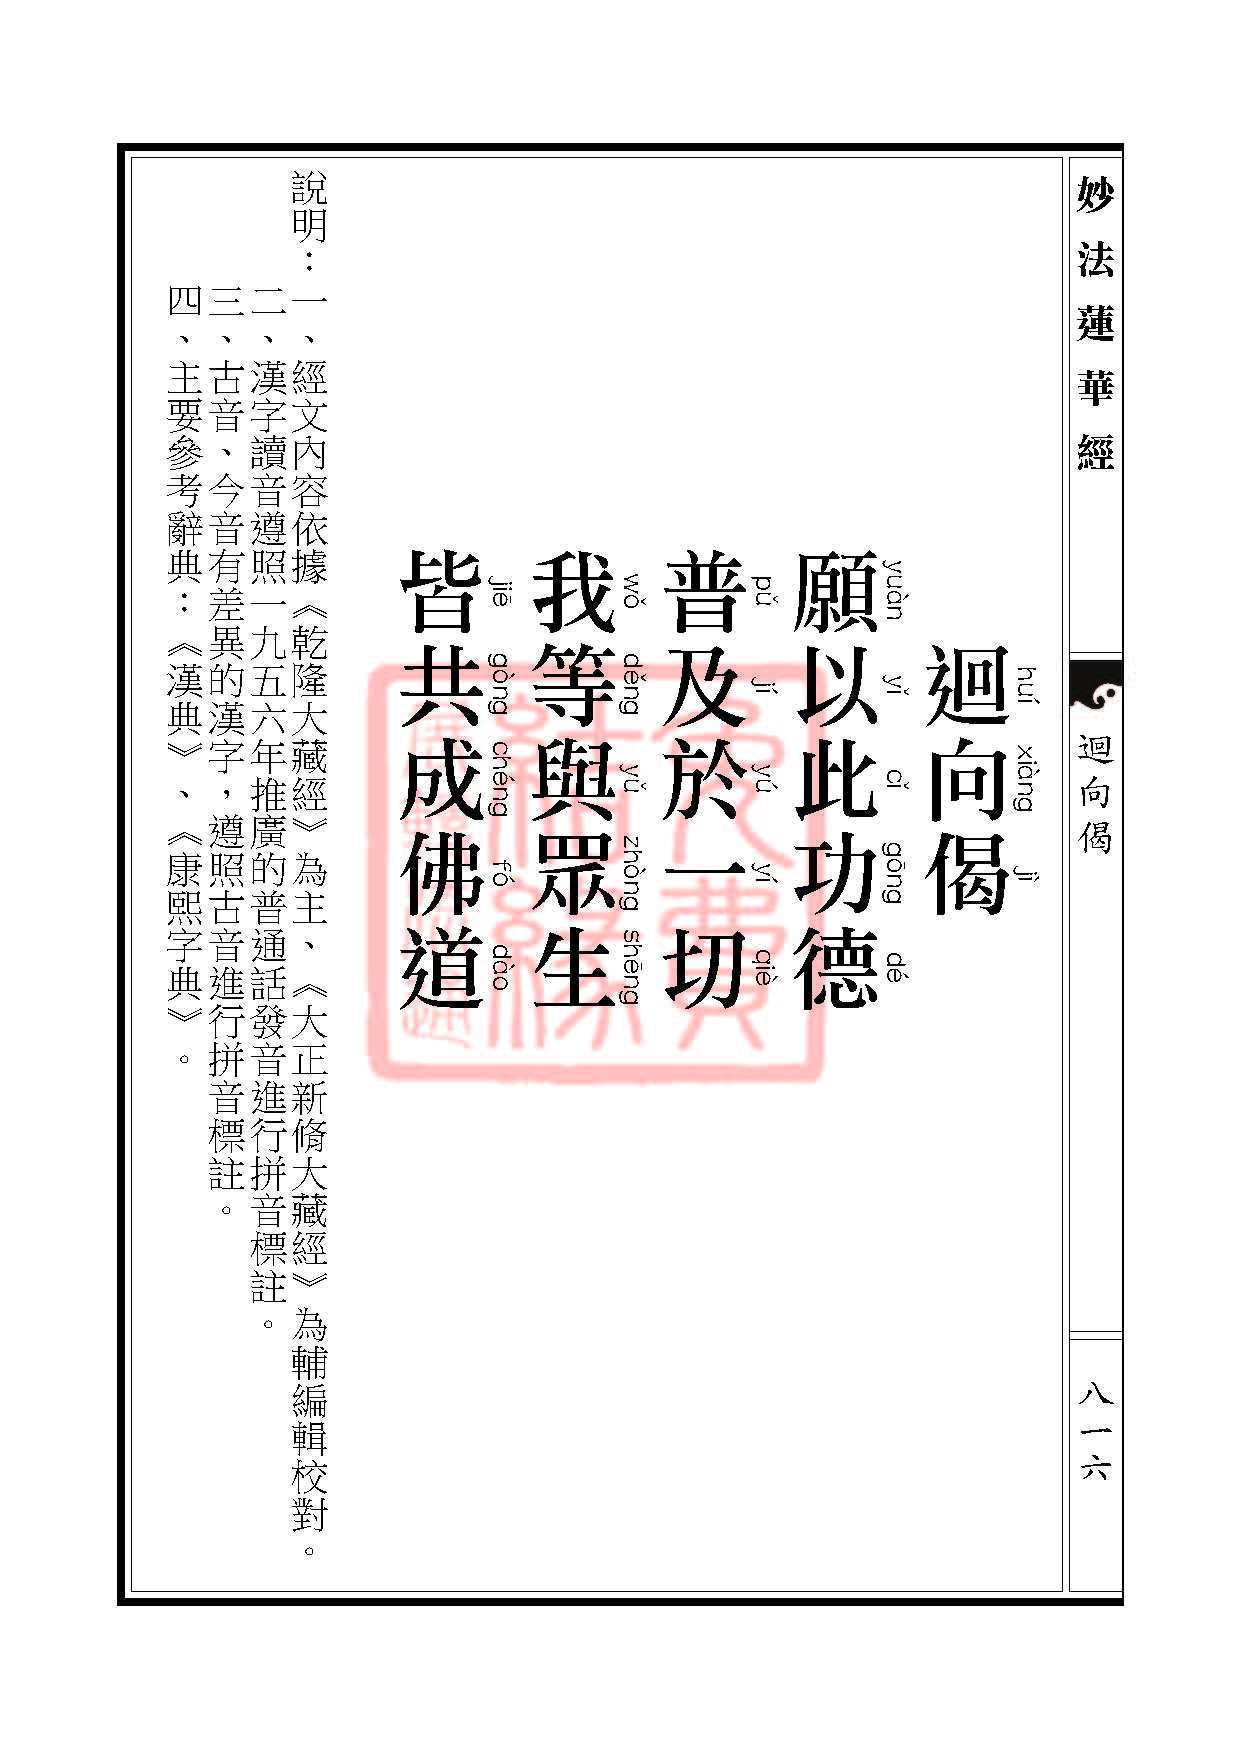 Book_FHJ_HK-A6-PY_Web_页面_816.jpg